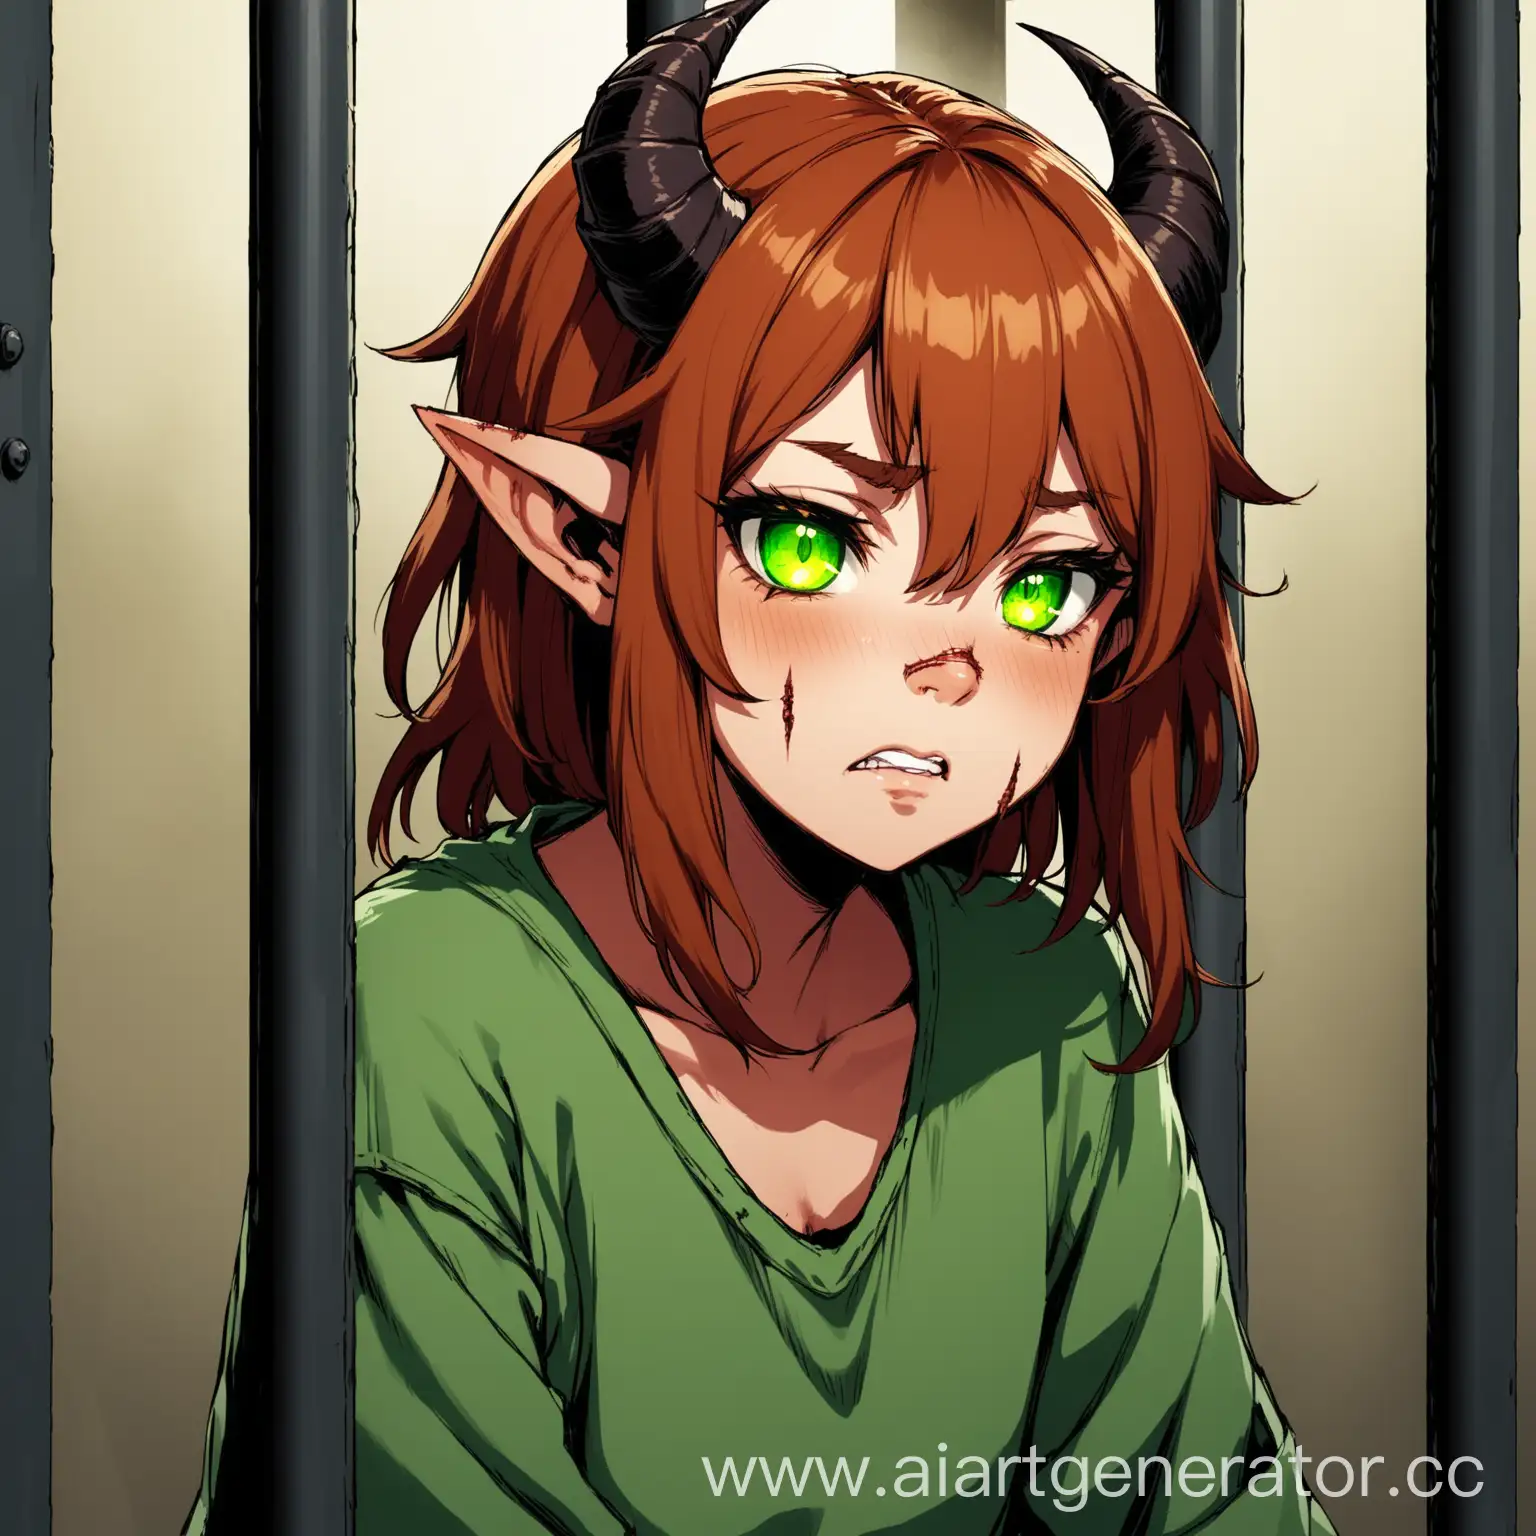 Tormented-Teenage-Tiefling-Girl-in-Prison-Cell-with-Broken-Horns